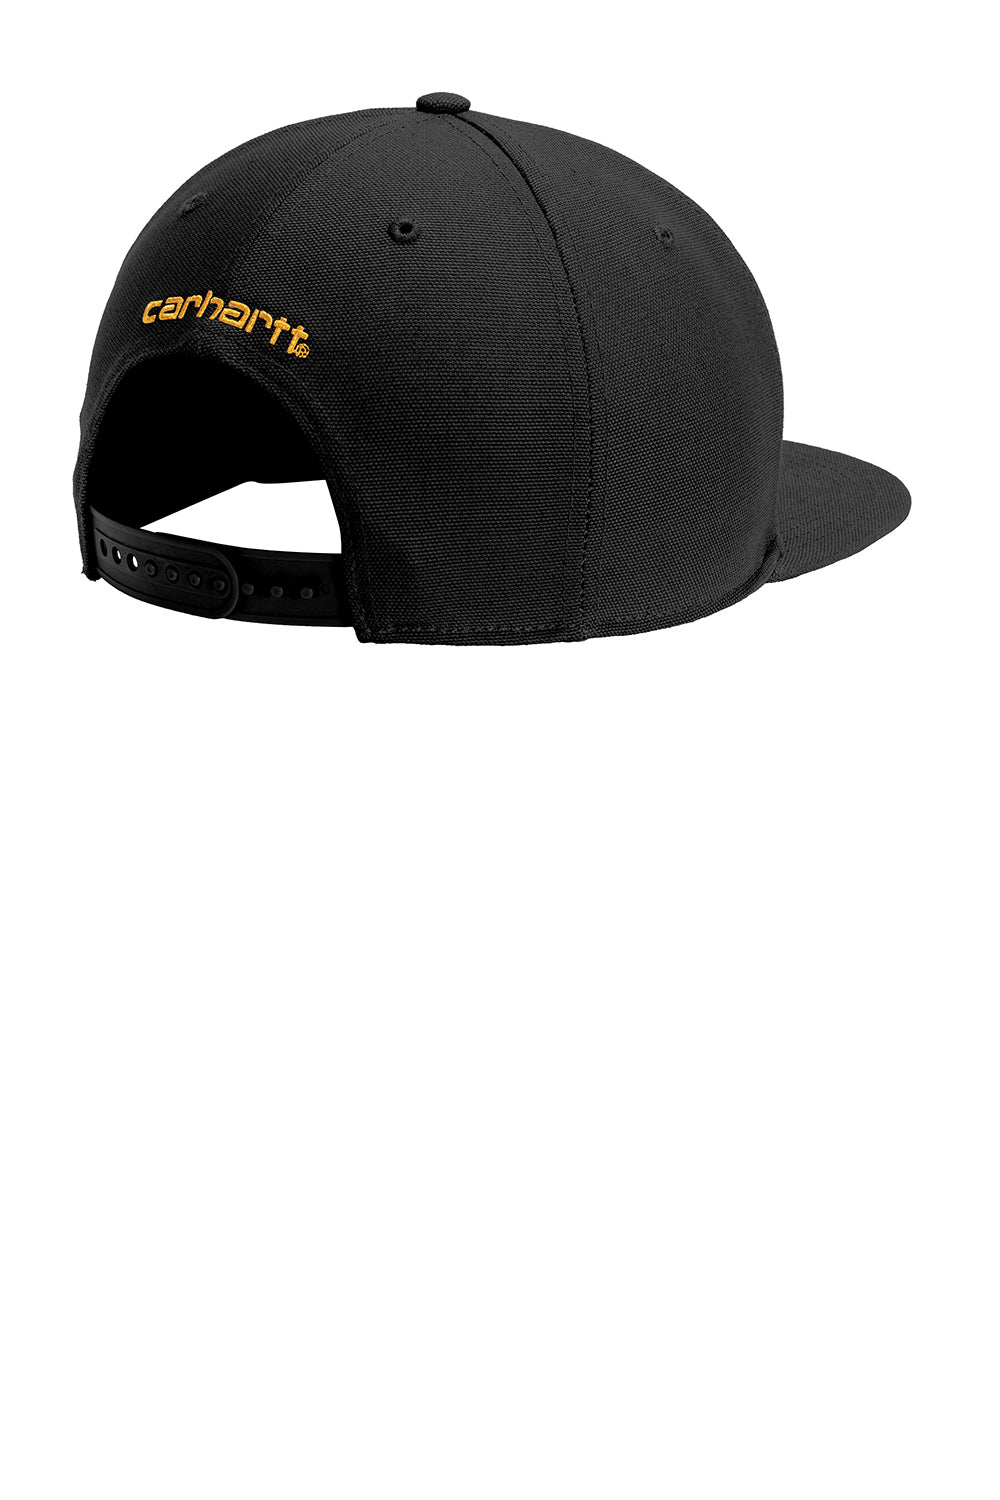 Carhartt CT101604  Ashland FastDry Moisture Wicking Adjustable Hat Black Flat Back